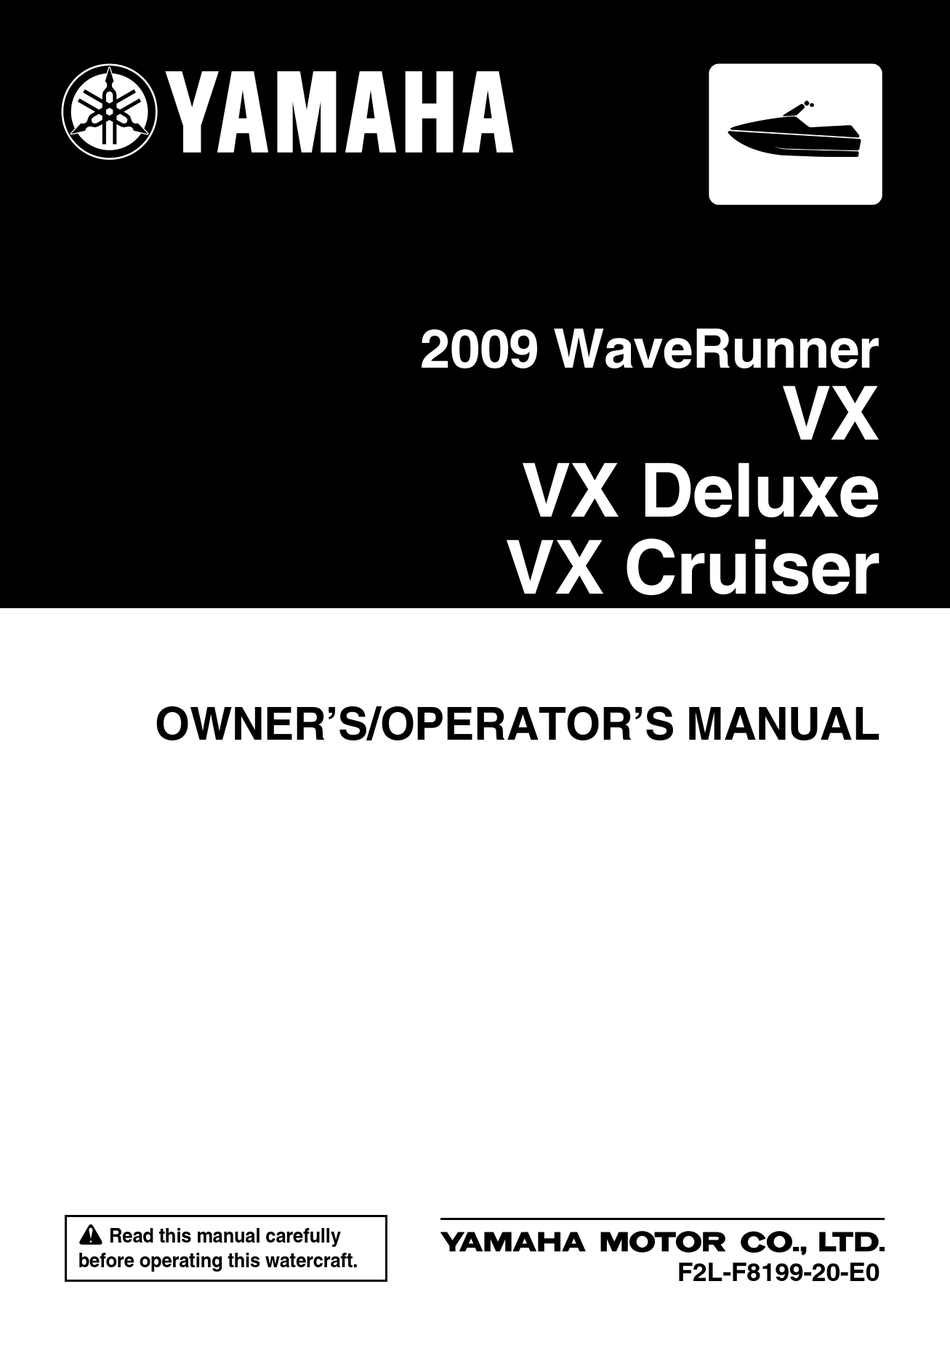 YAMAHA 2009 WAVE RUNNER OPERATOR'S MANUAL Pdf Download | ManualsLib